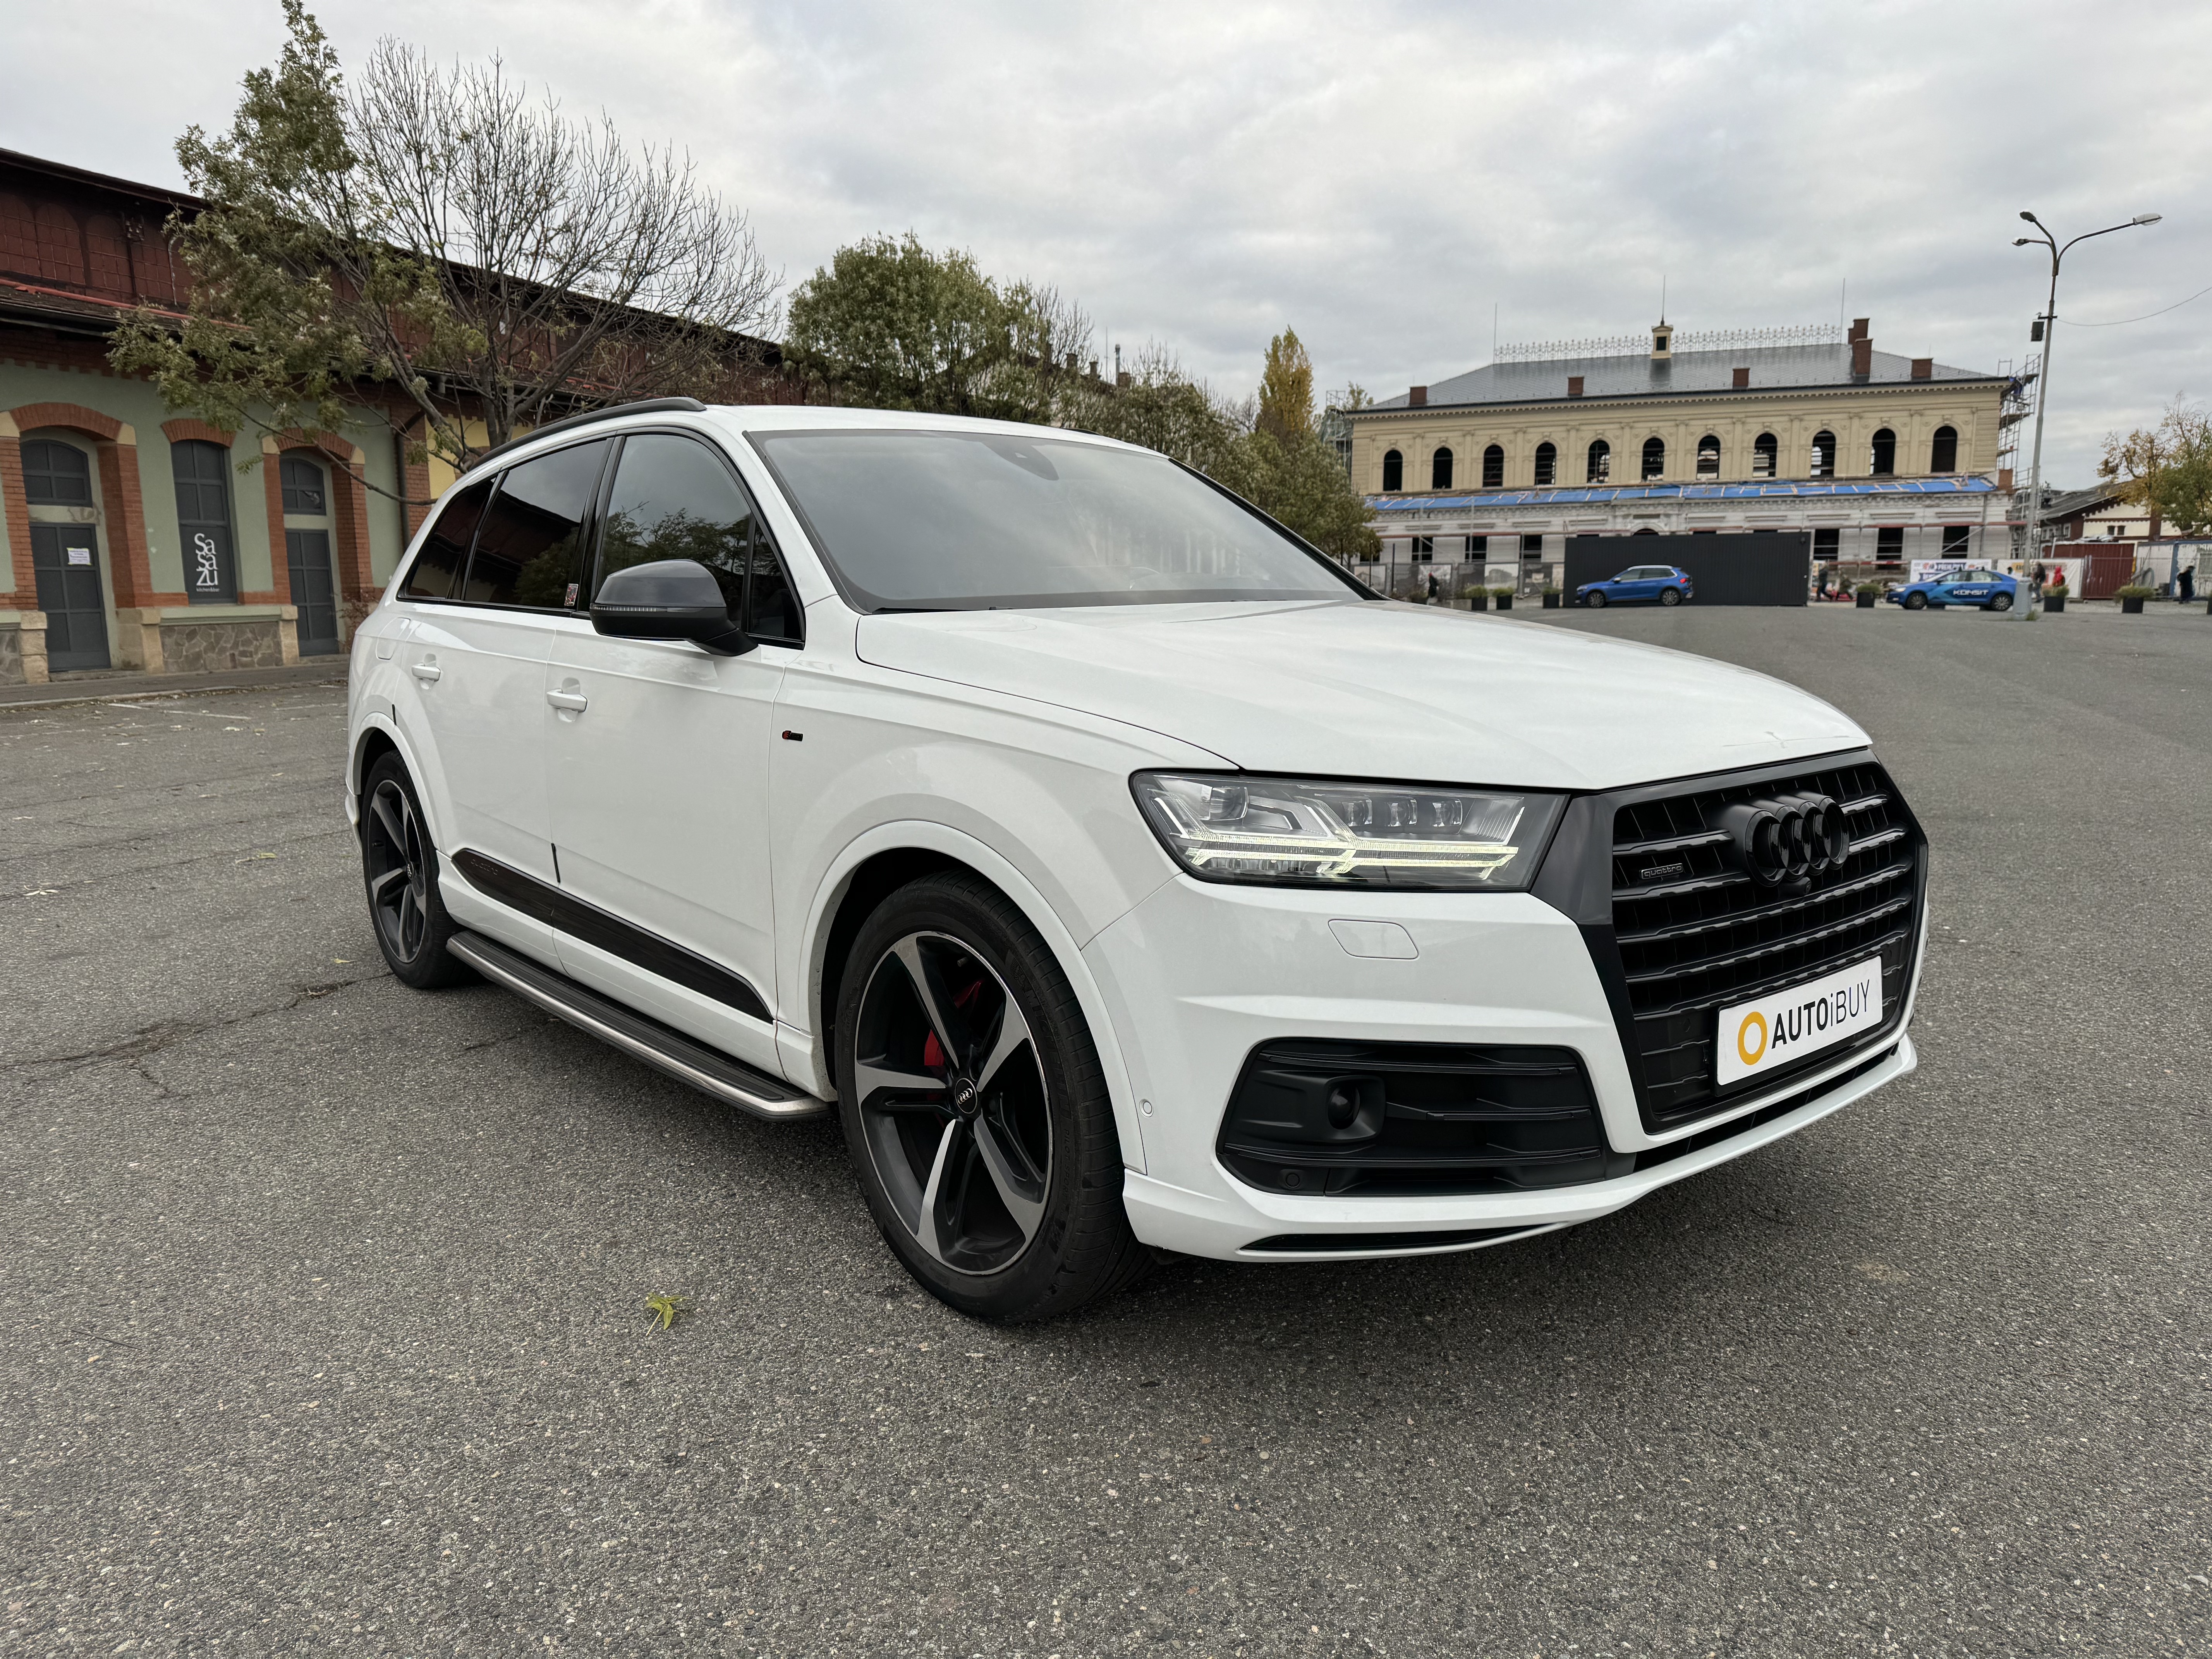 Audi Q7 3.0 TDI quatto S-line | ojeté české auto našeho VIP zákazníka | naftové SUV | super výbava a stav | nebourané | skvělá cena | nákup online na AUTOiBUY.com